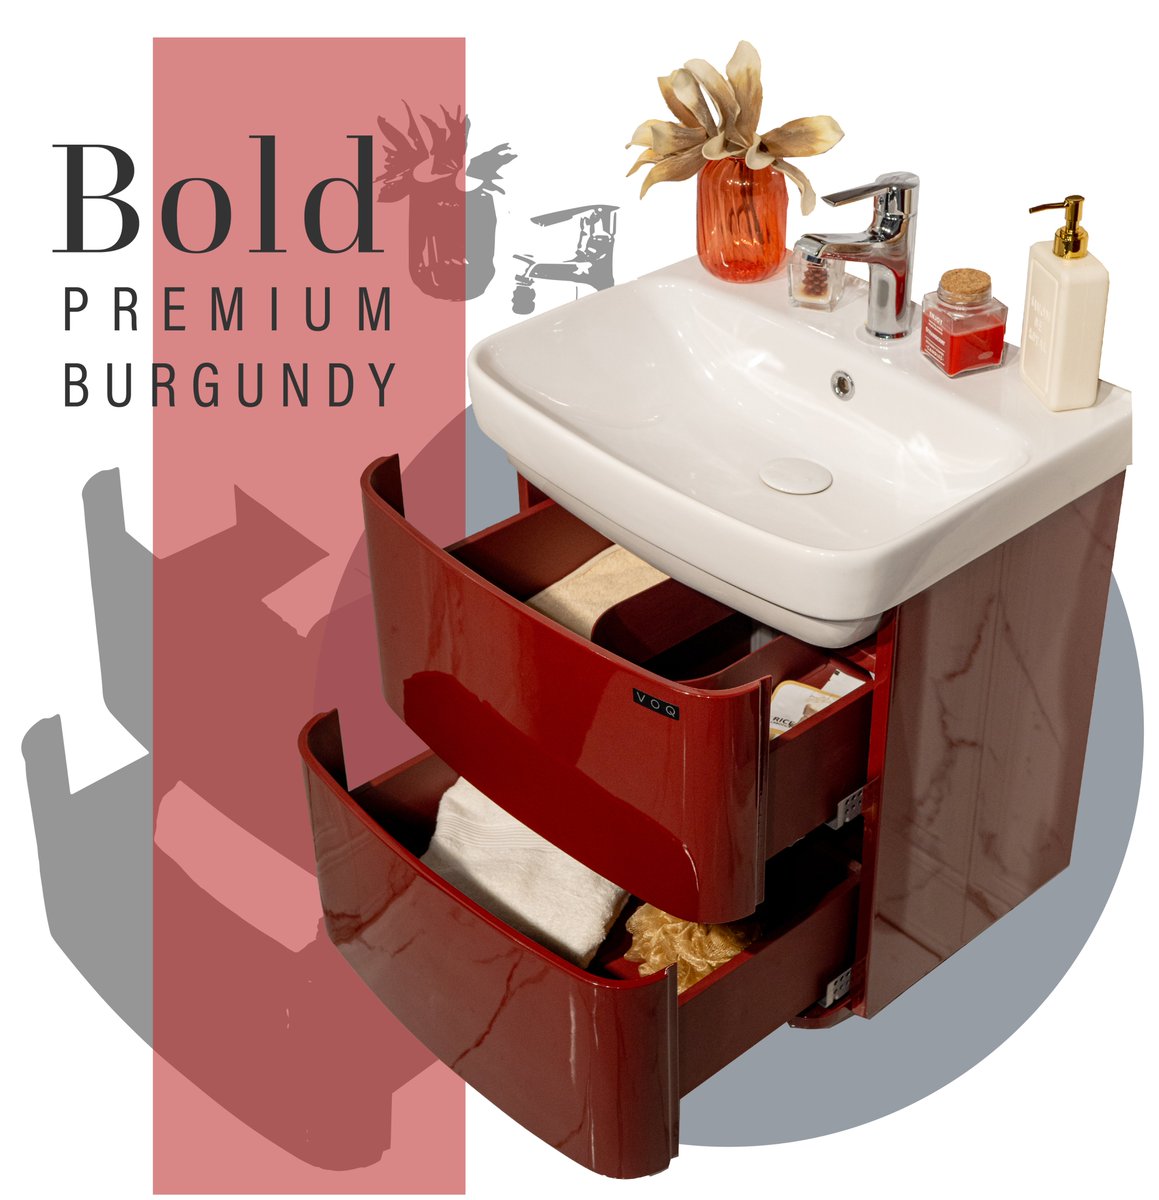 Bold Serisi’nin premium bordo rengi ile yaz enerjisi banyolarda! Summer energy is in the bathrooms with the premium burgundy color of the Bold Series! #voq #voqbagno #lamodainbagno #arredobagno #bathroomfurniture #banyomobilyası #bold